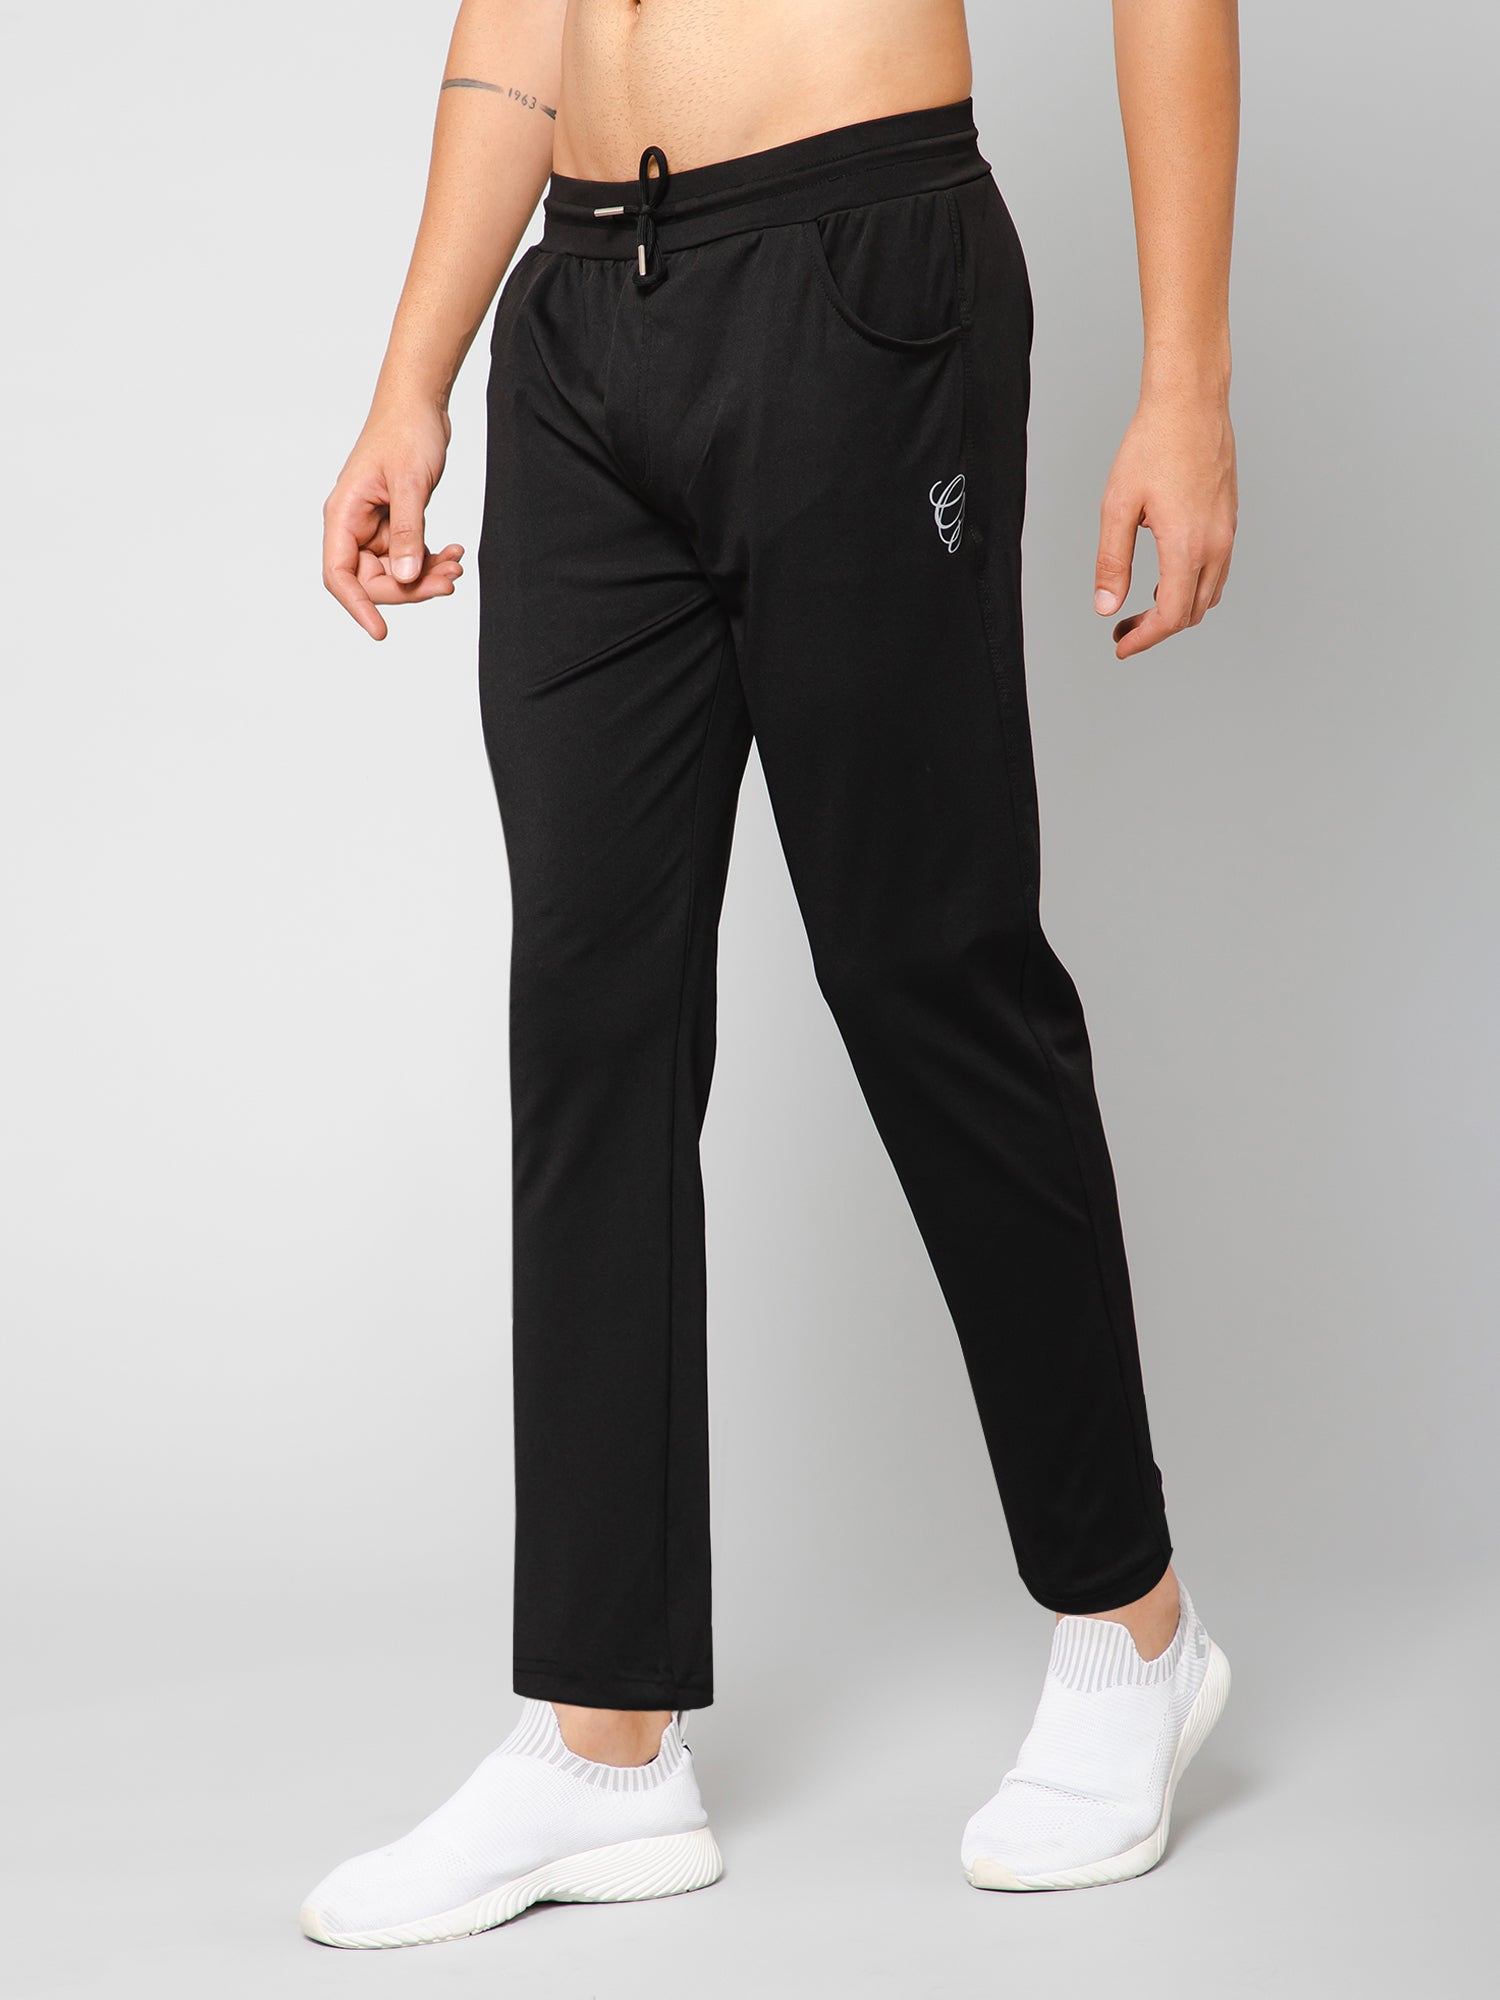 Aayomet Men'S Sweatpants Long Inseam Men's Sweatpants Workout Running  Sweats Lounge Pants Zipper Pockets, XL - Walmart.com